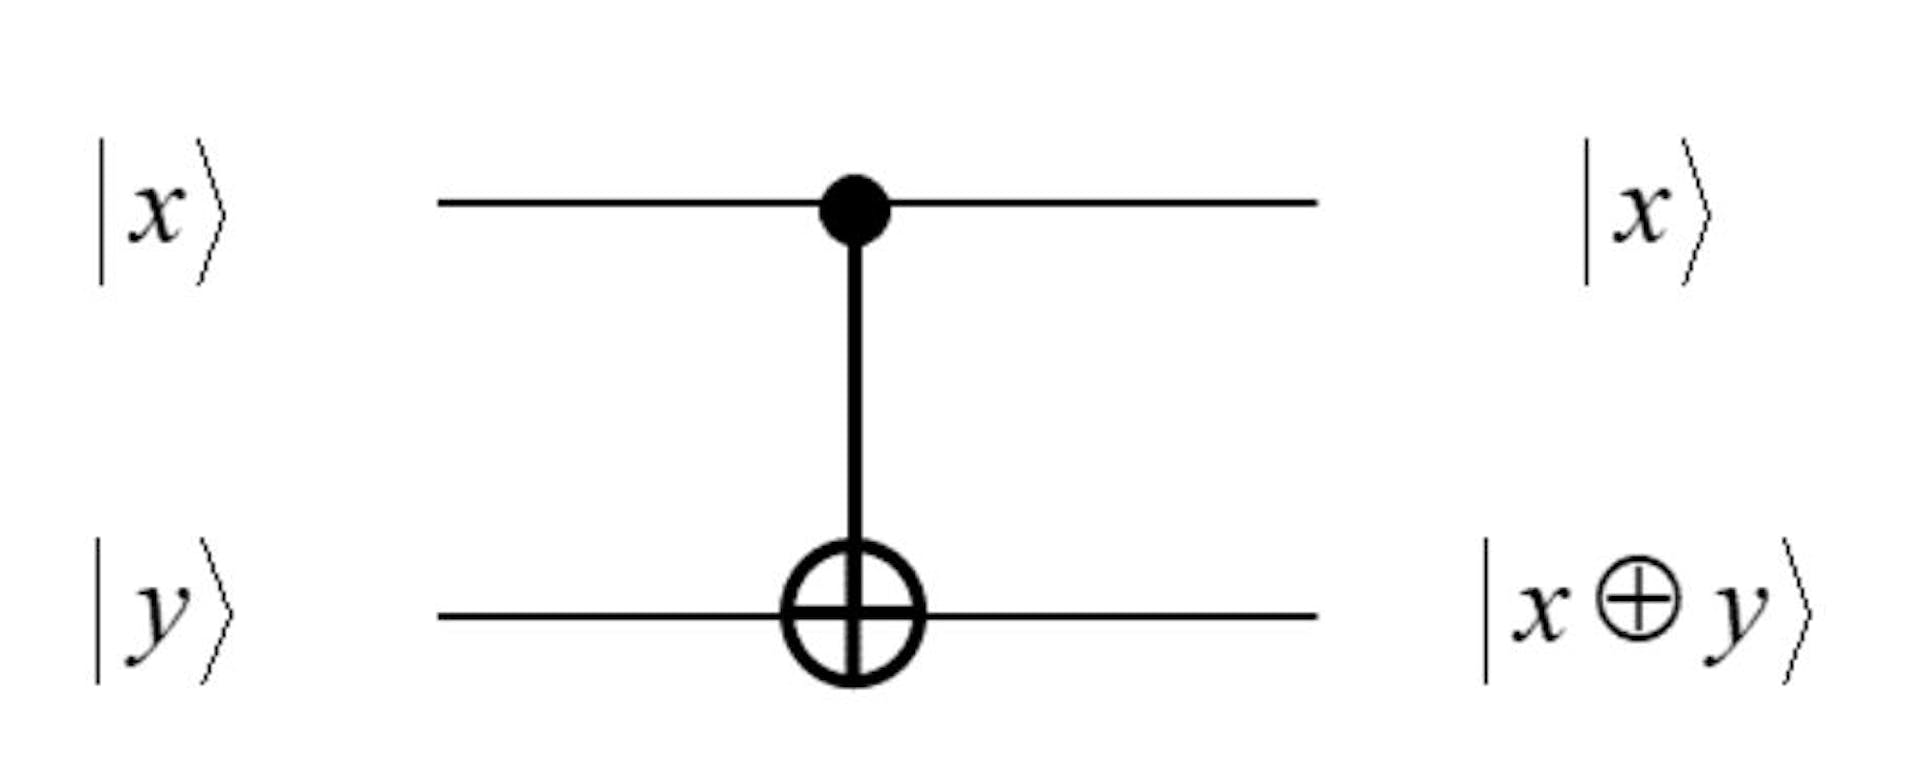 CNOT ゲート --> ソース - https://quantumcomputing.stackexchange.com/questions/8444/input-and-output-qubit-notation-in-quantum-gates